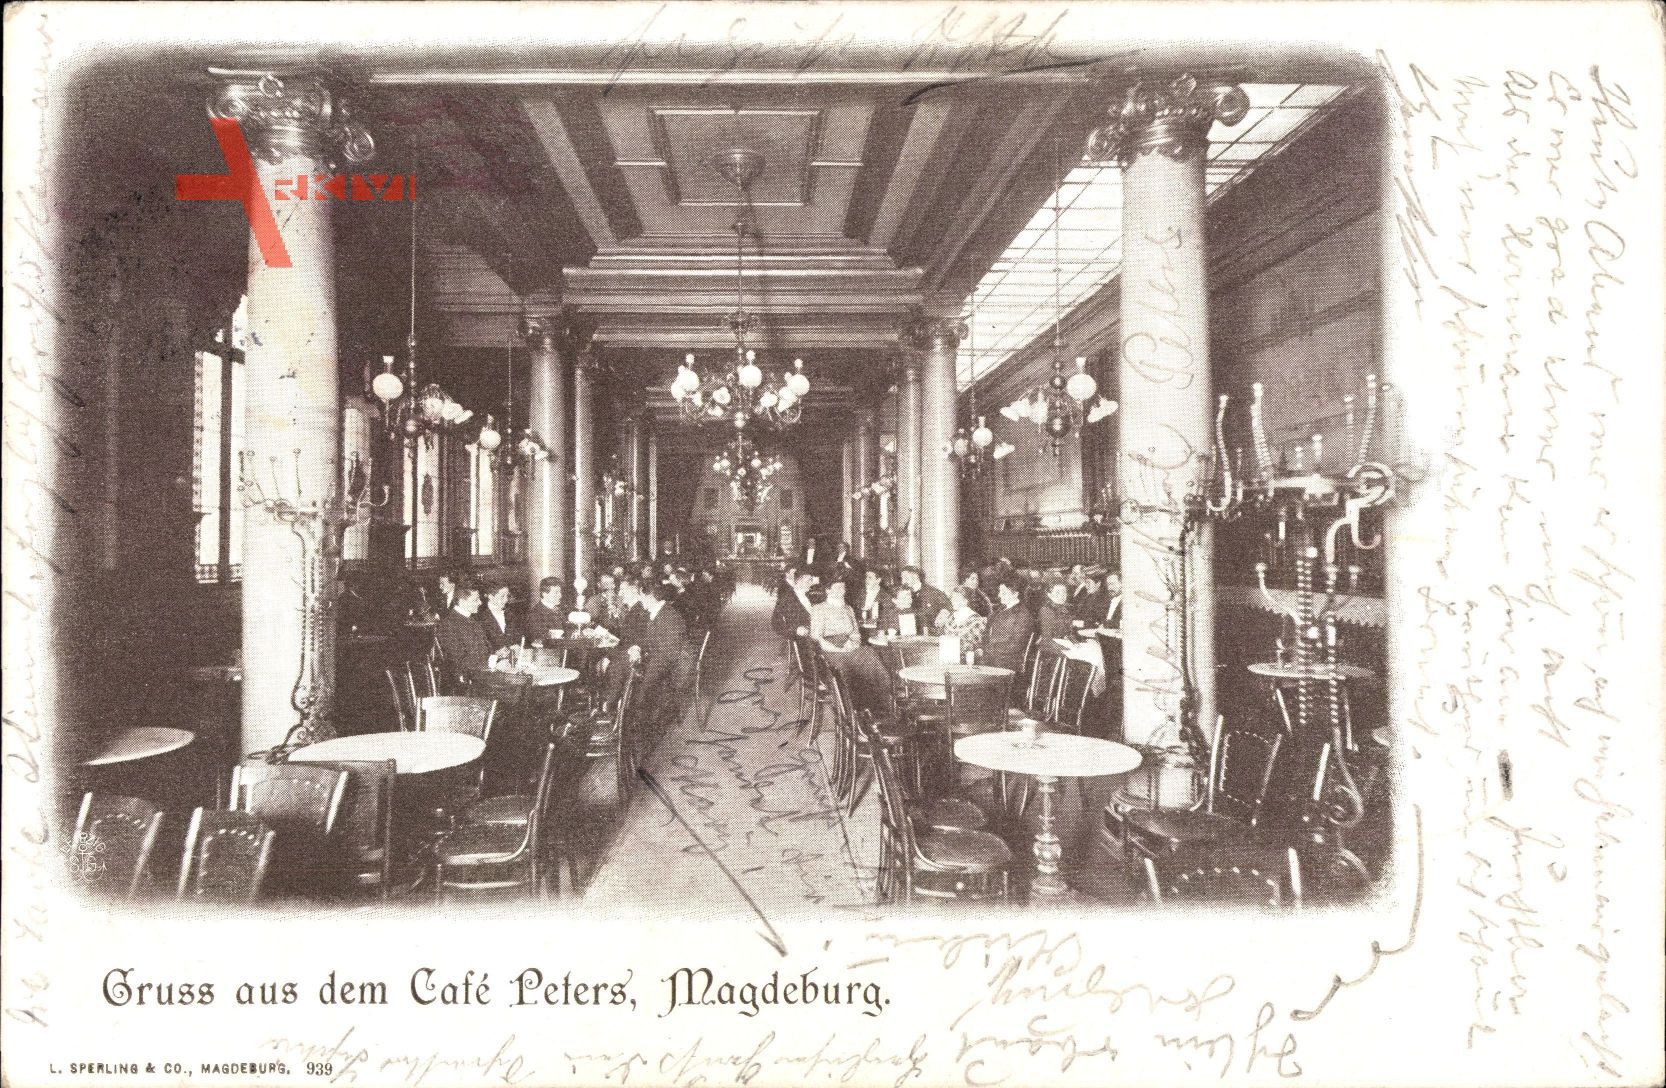 Magdeburg, Inneres des Cafe Peters mit Gästen